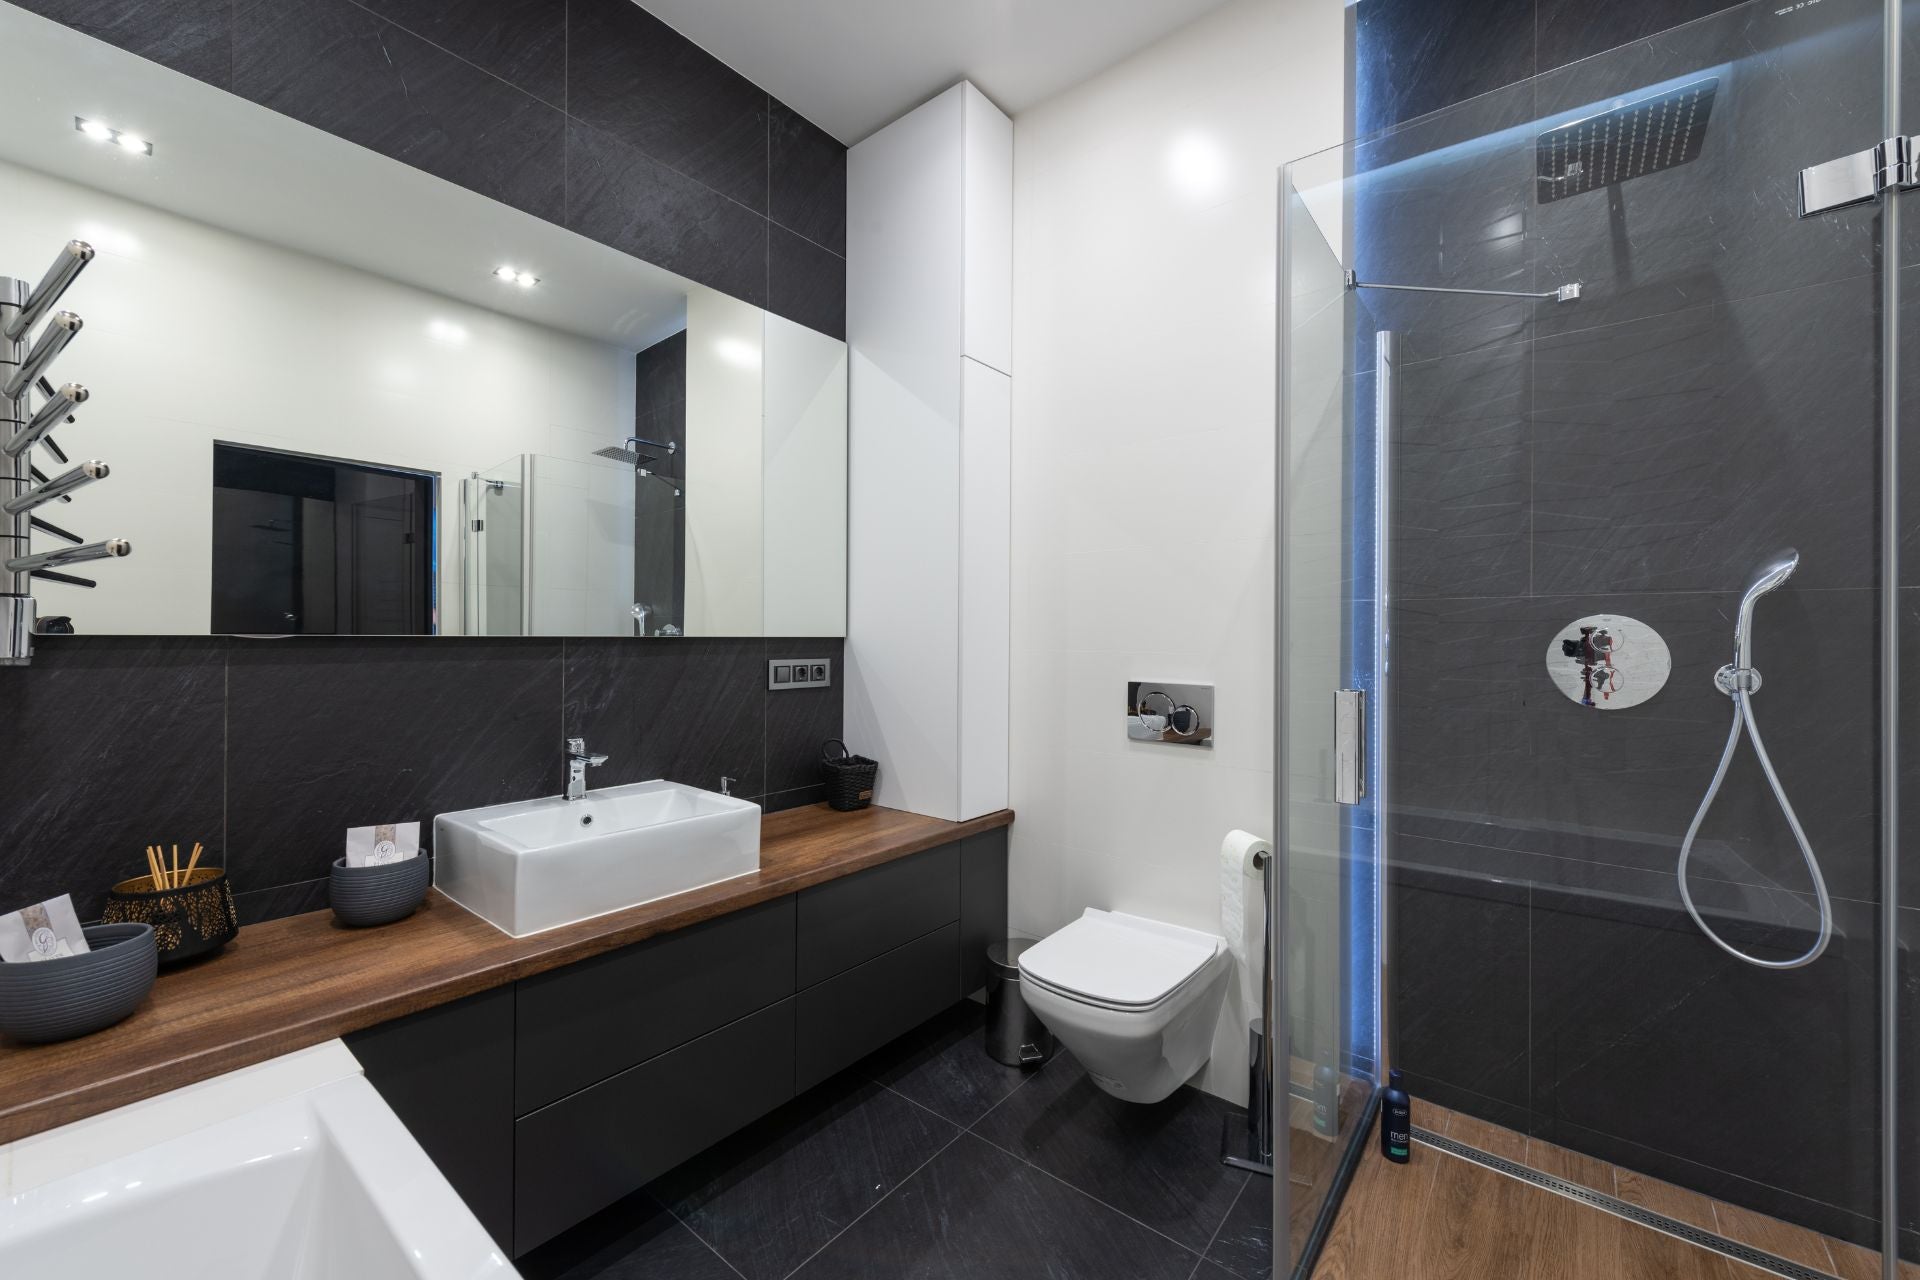 A modern wall-hung toilet in a sleek bathroom